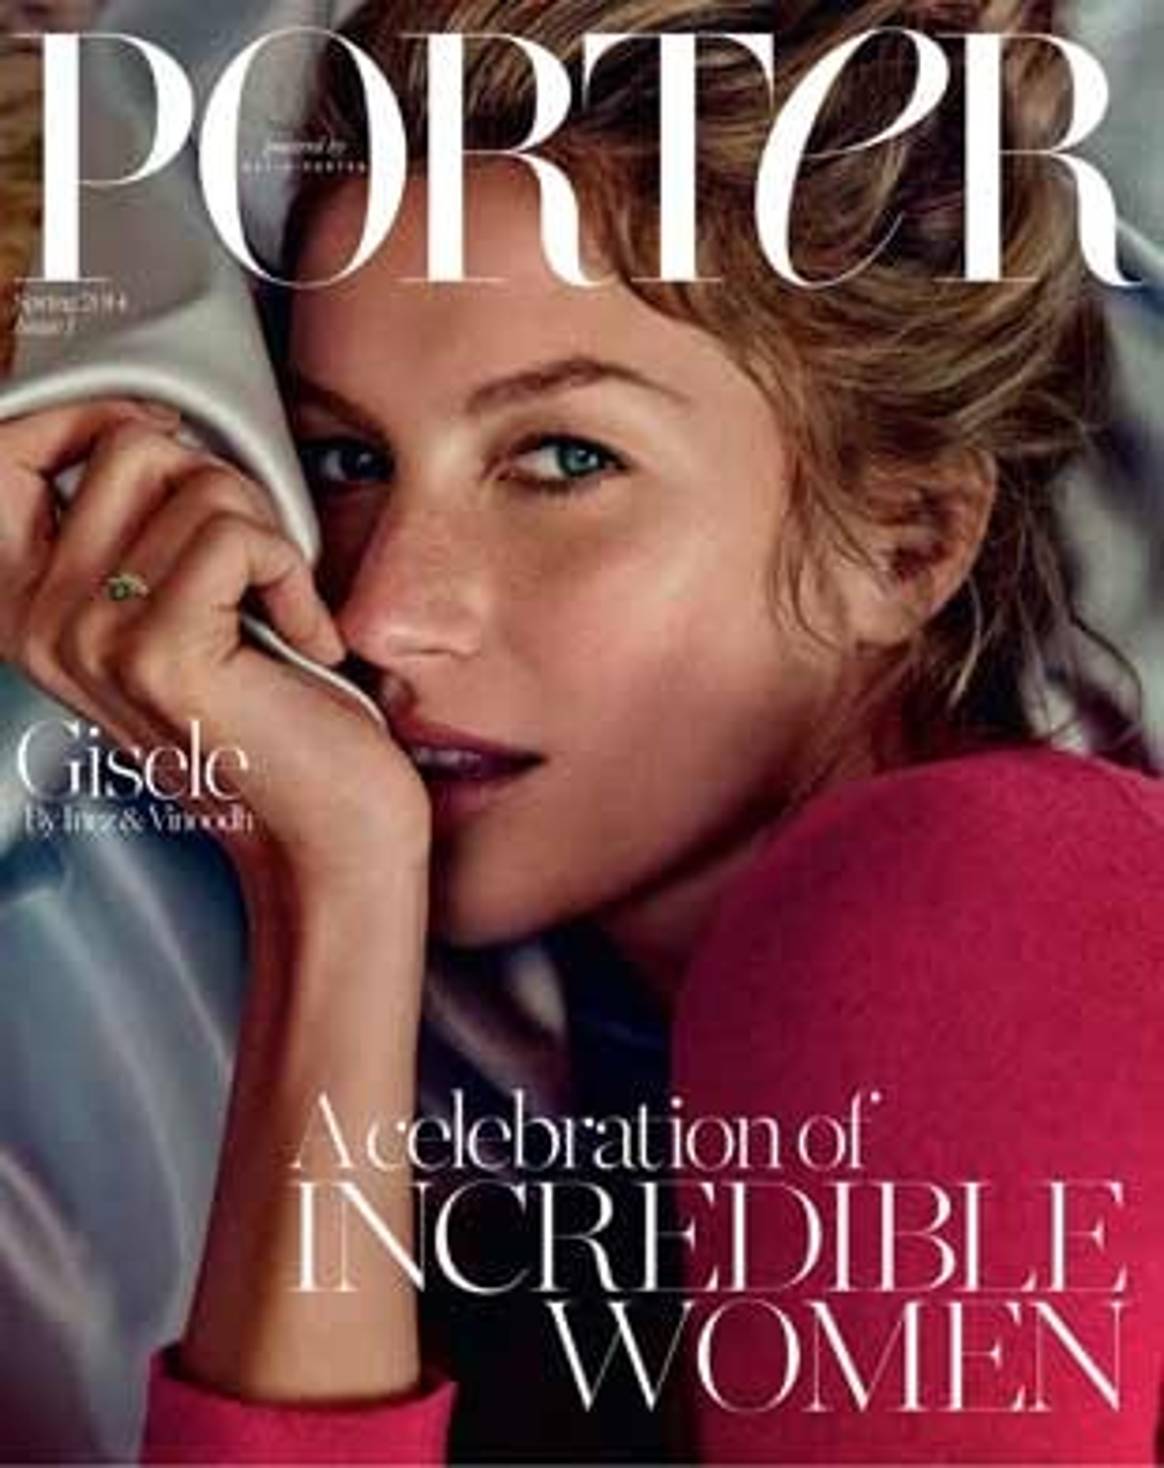 Porter: "the biggest launch of a British Fashion Magazine"